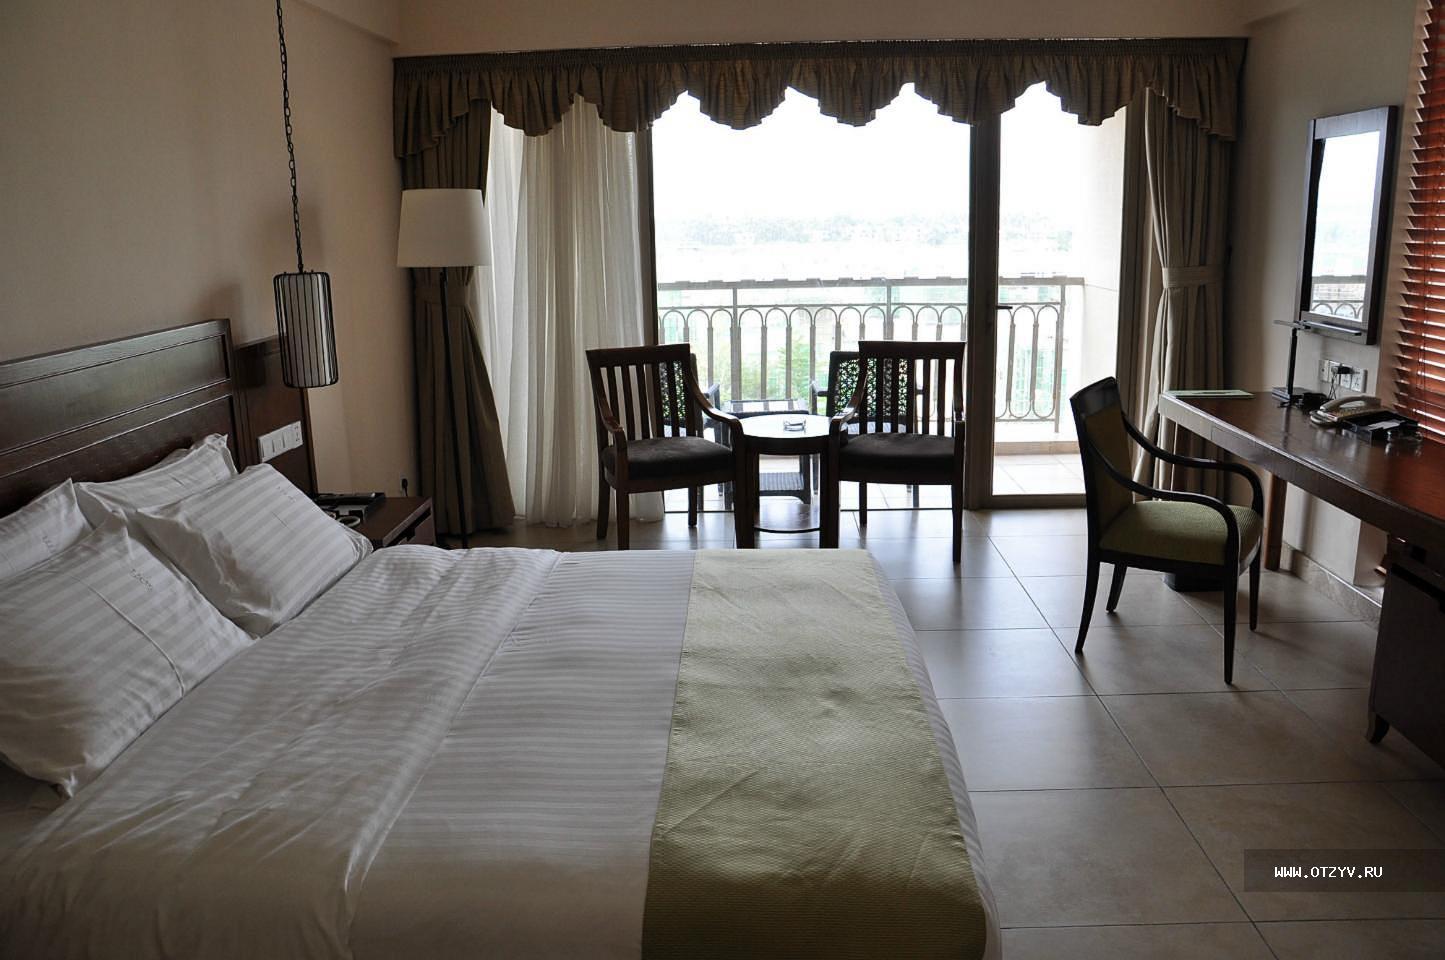 Holiday Inn Sanya Bay Resort